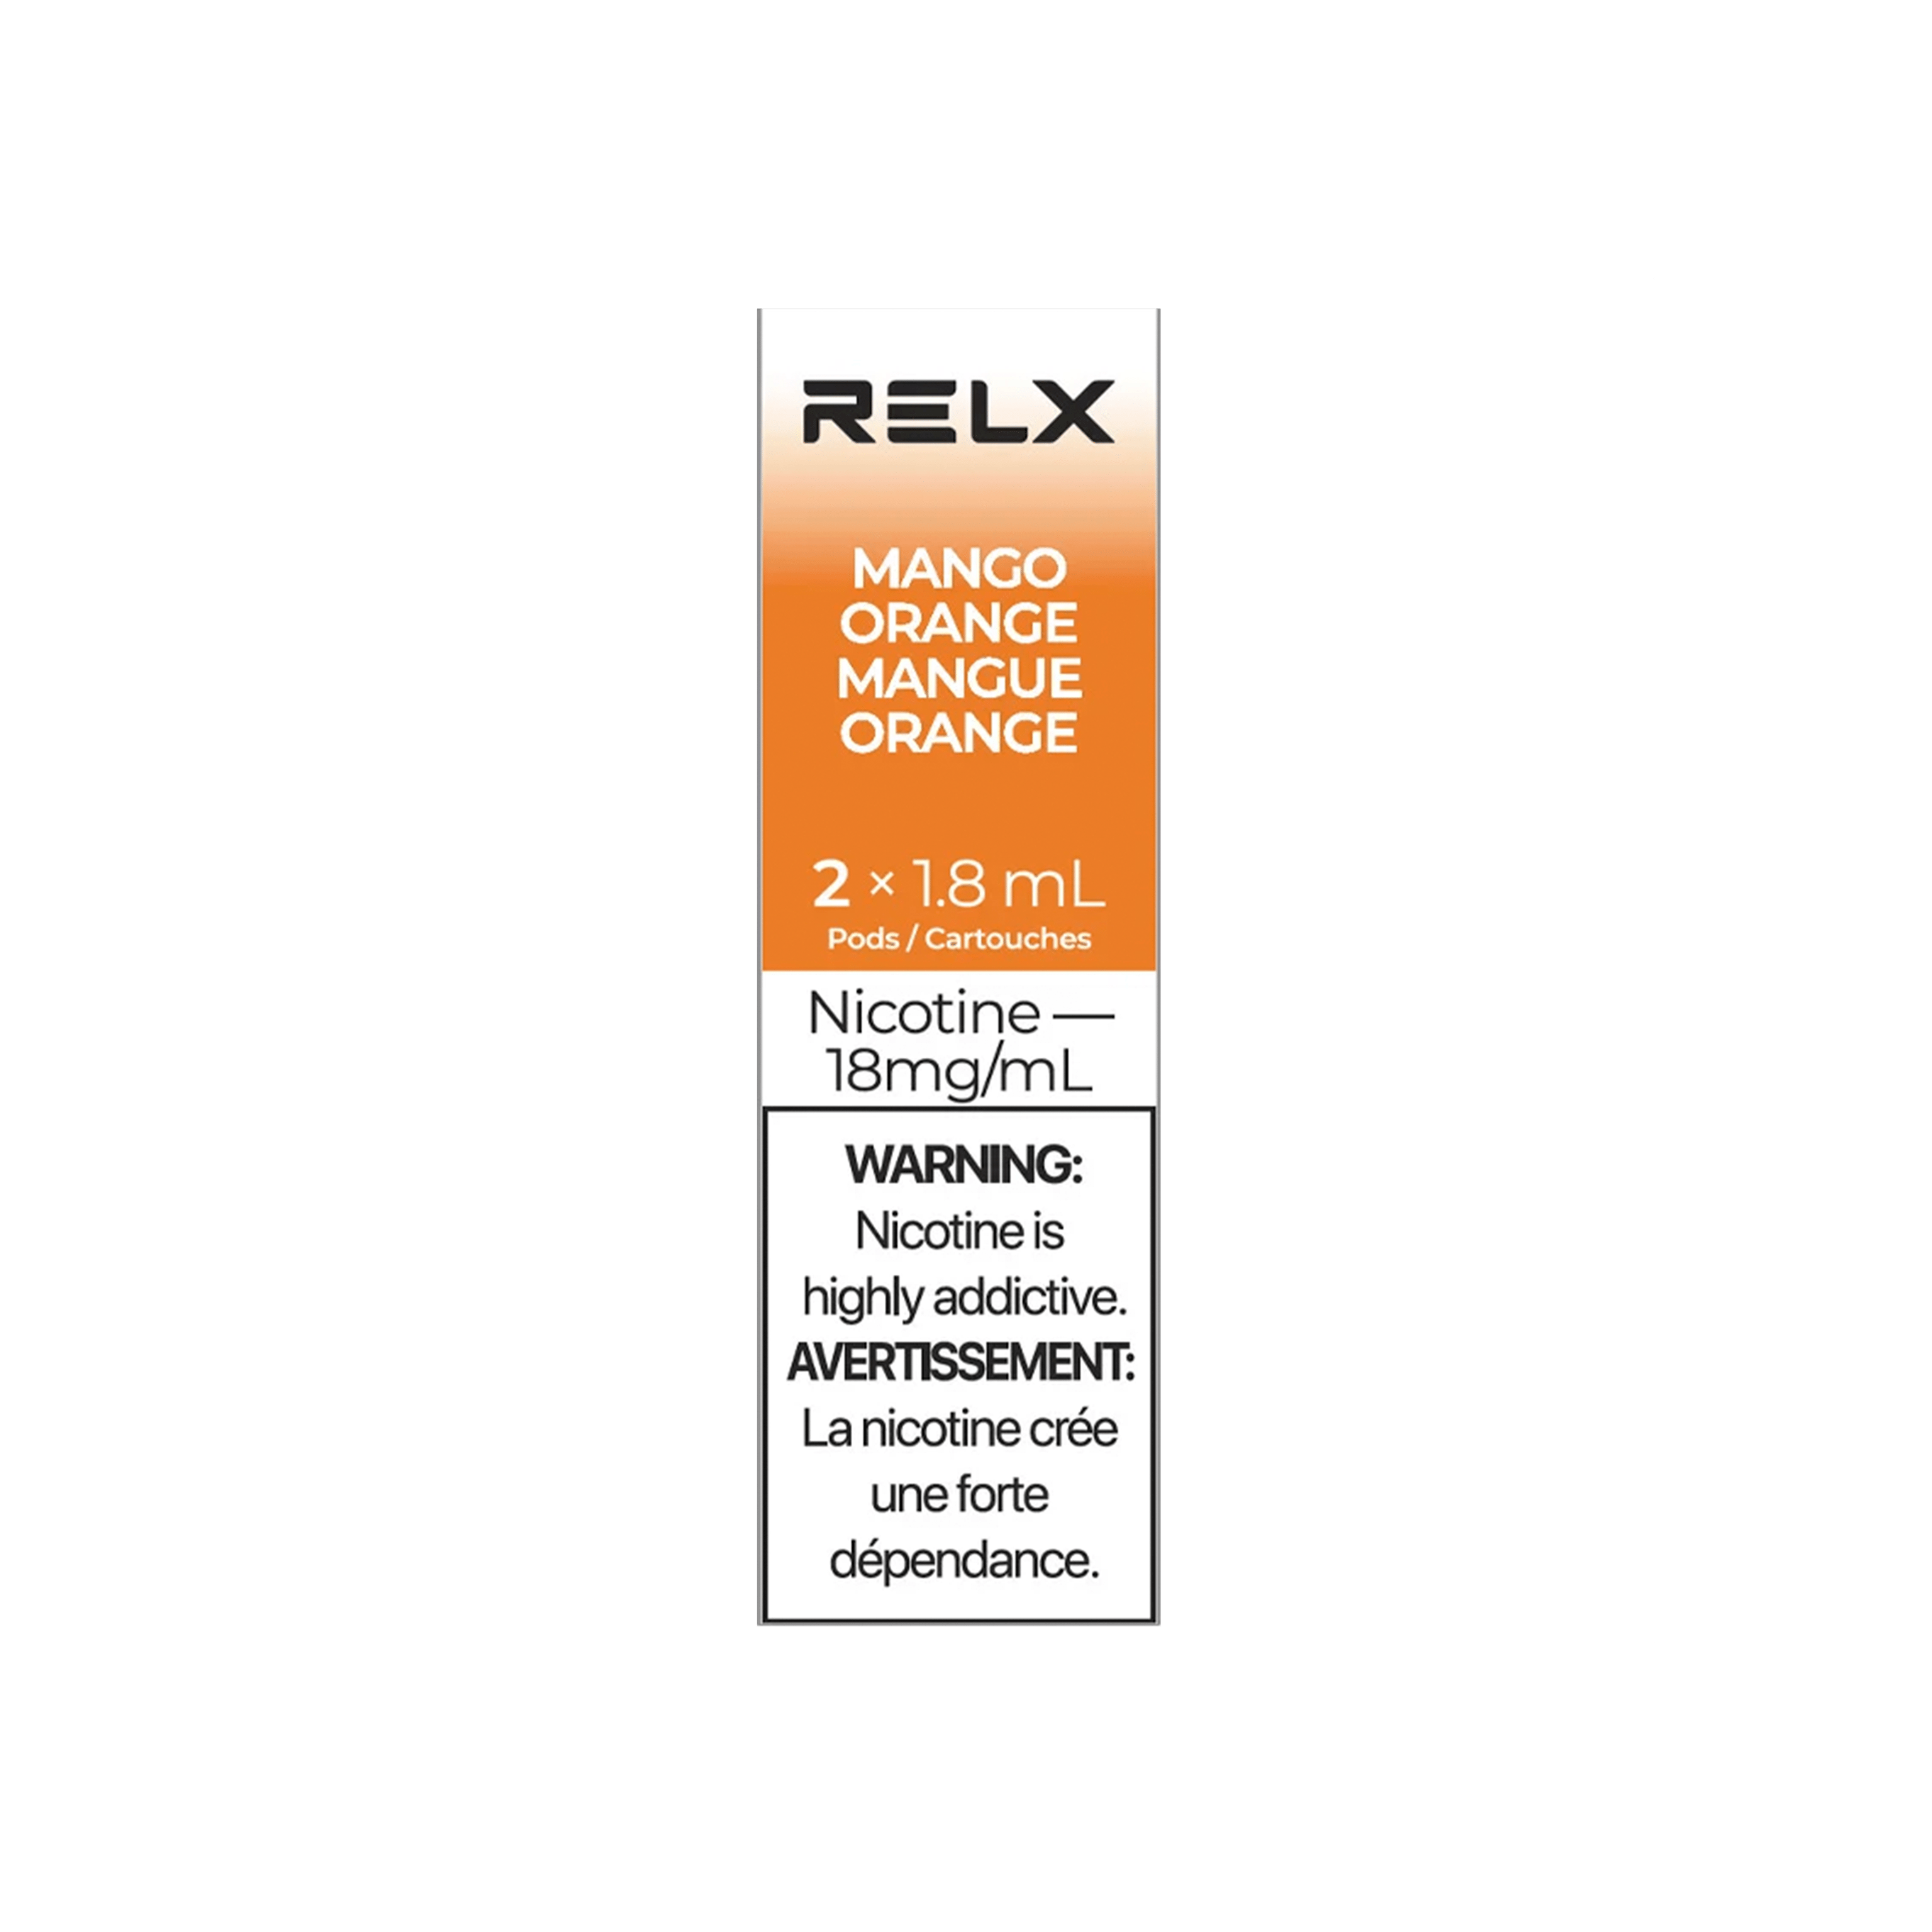 RELX Pro Vape Pod - Mango Orange available on Canada online vape shop